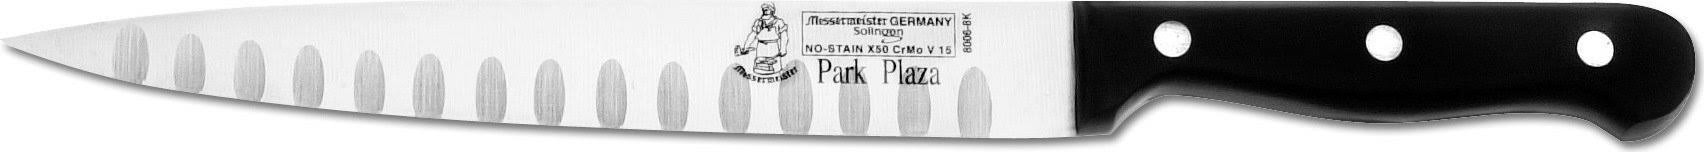 Messermeister Park Plaza Kullenschliff Carving Knife - Black, 8"